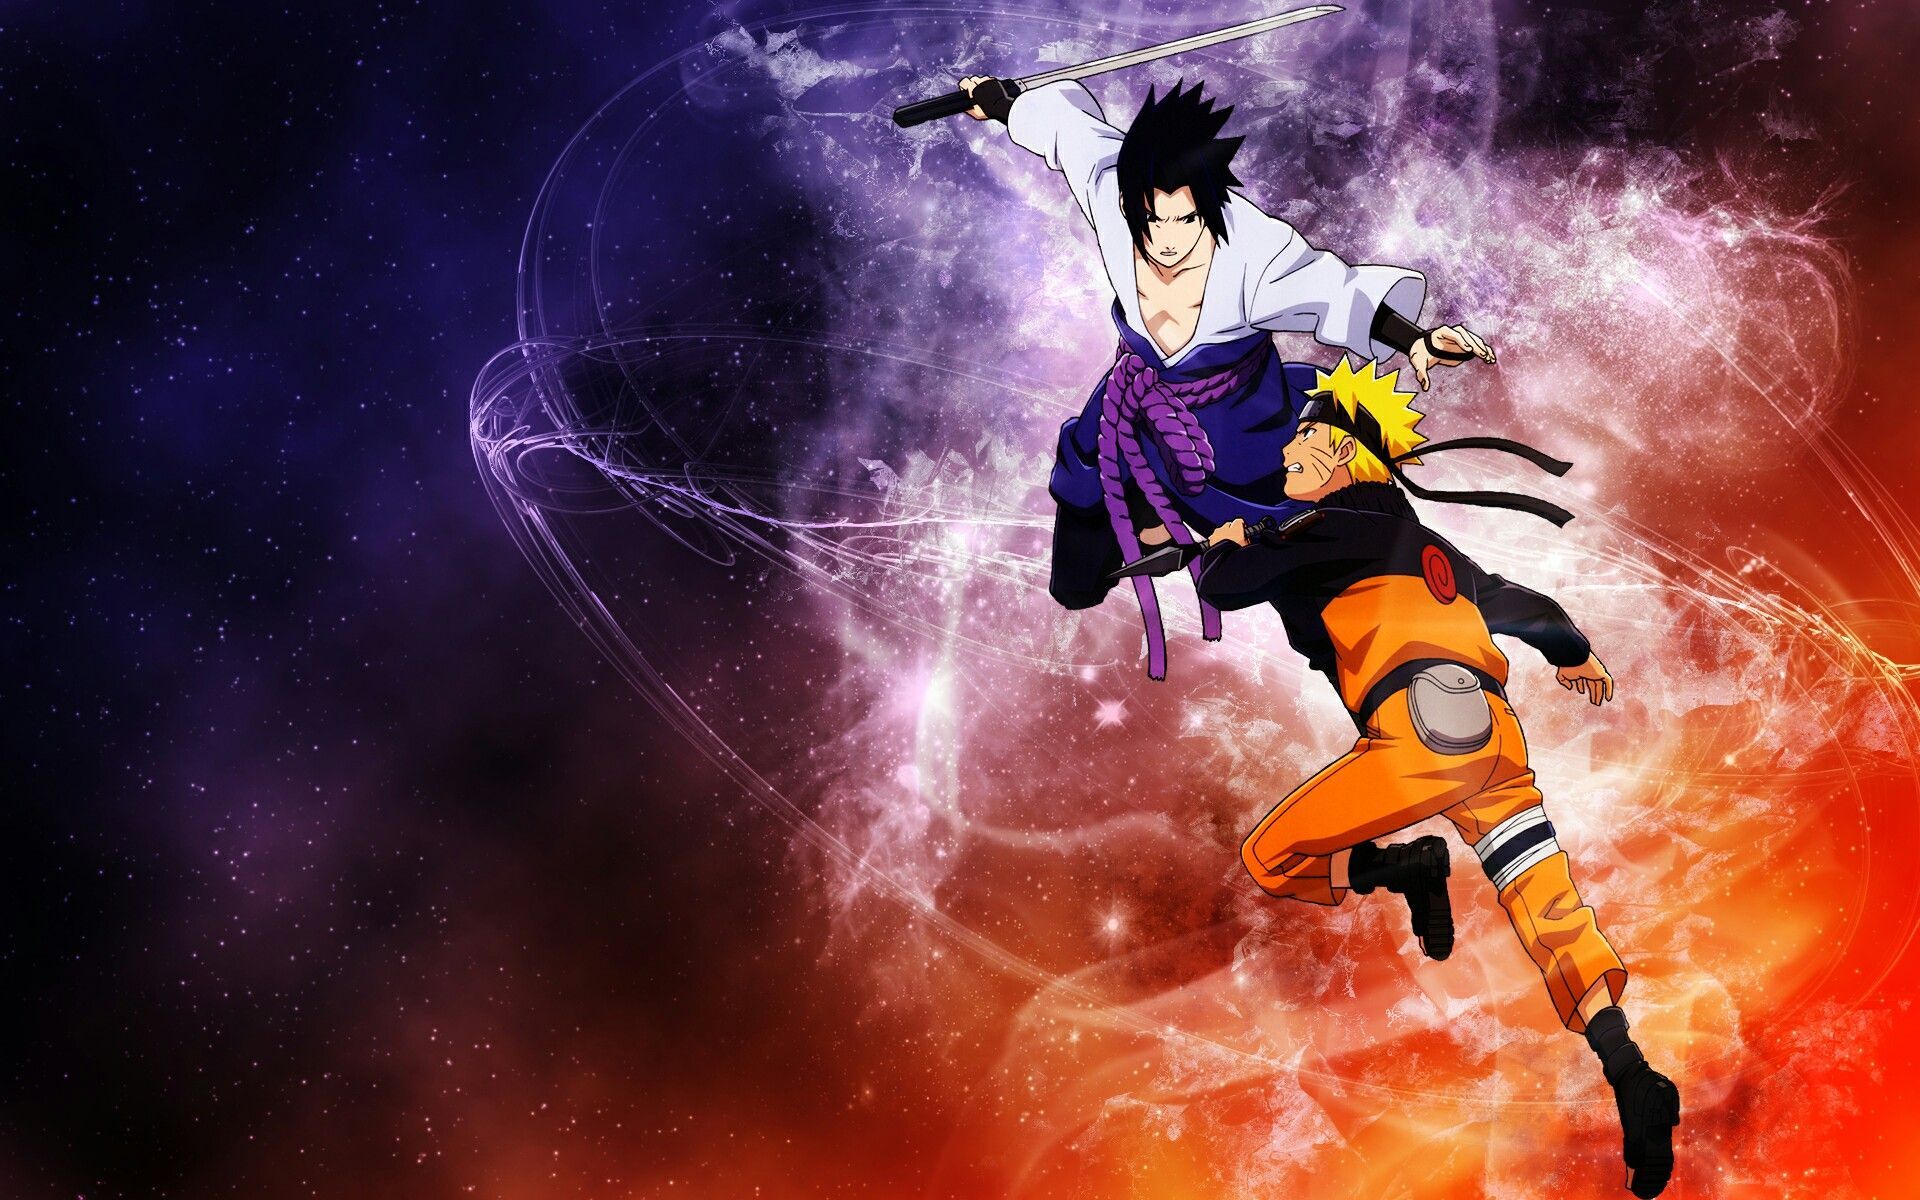 ANIME & MANGA. Naruto and sasuke wallpaper, Naruto wallpaper, HD anime wallpaper